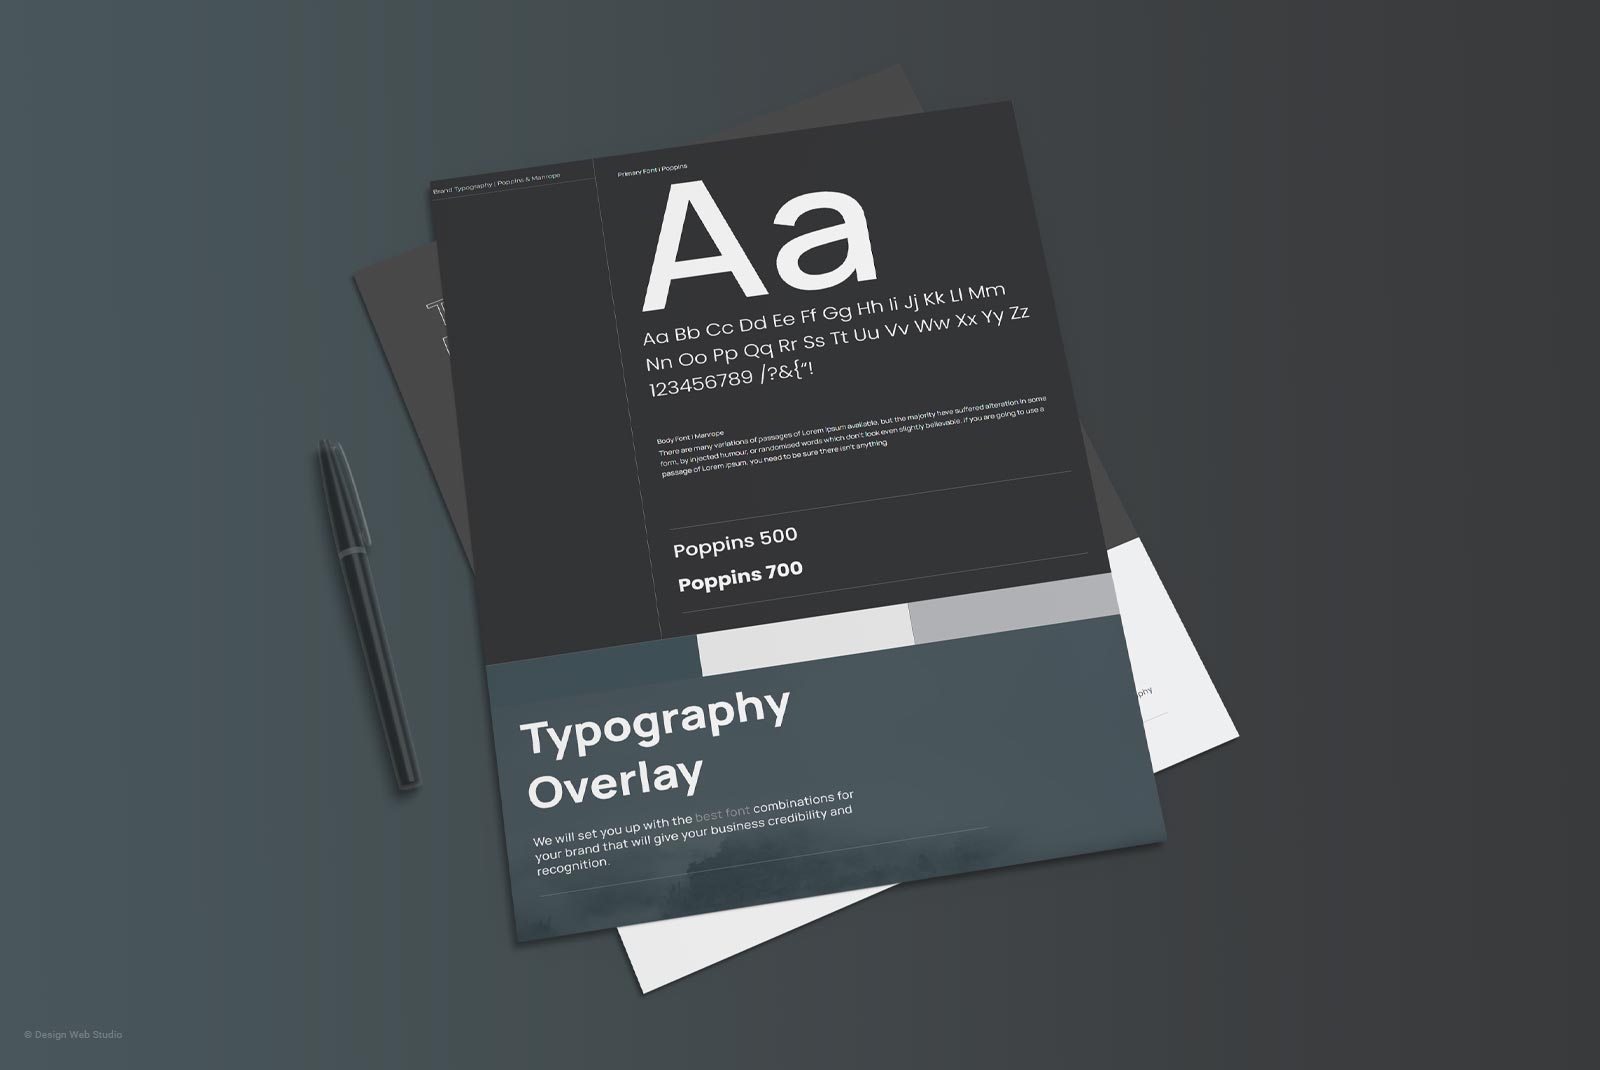 Typography sheet